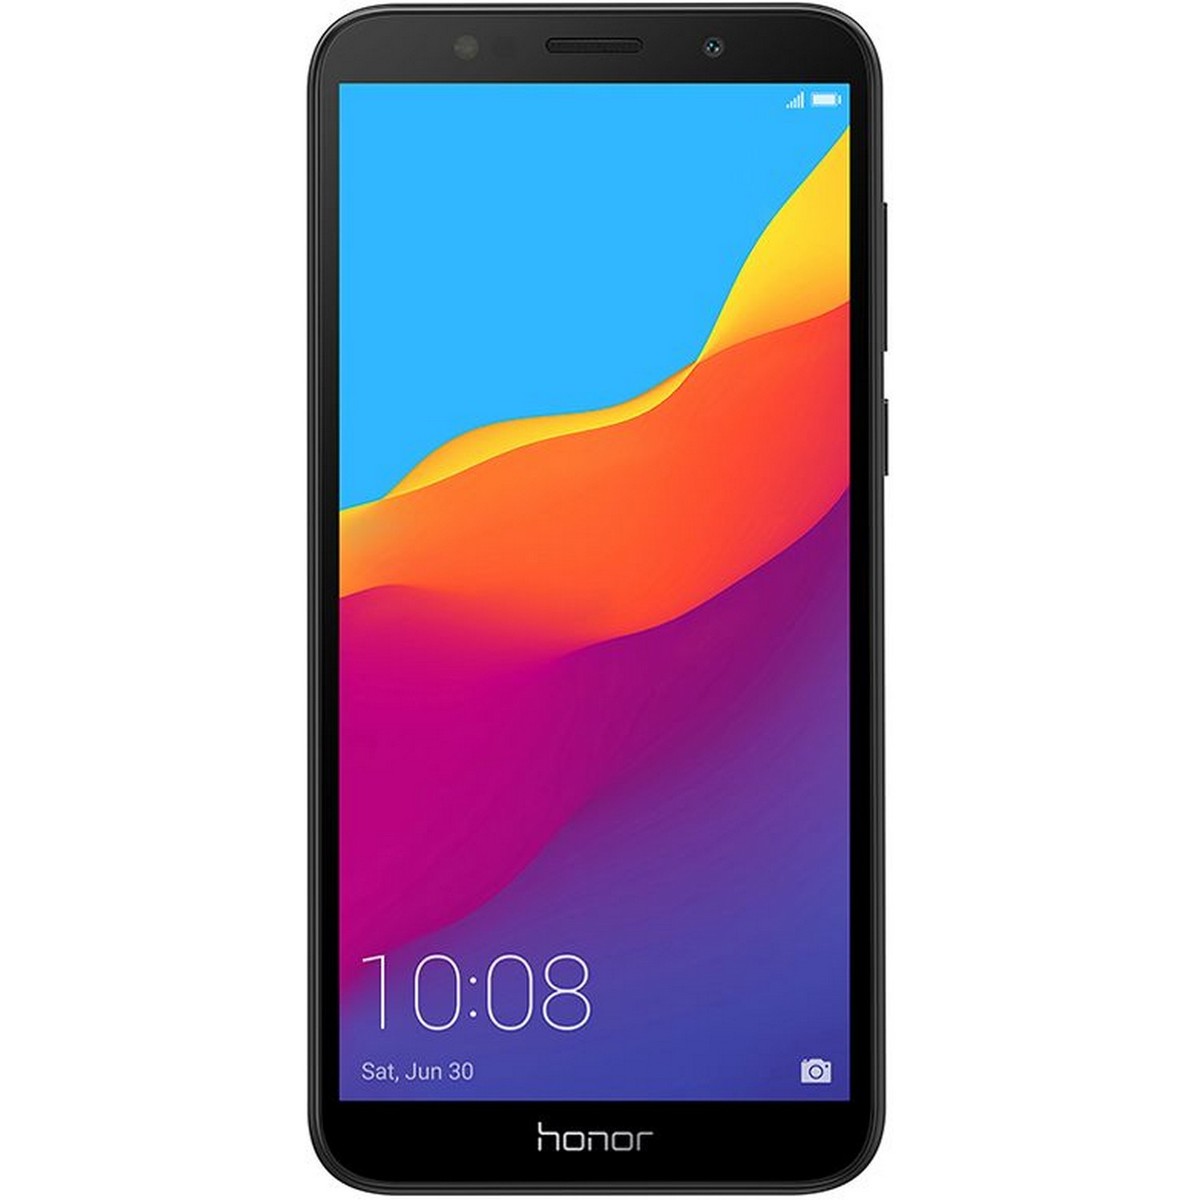 Honor 7S 16GB Black